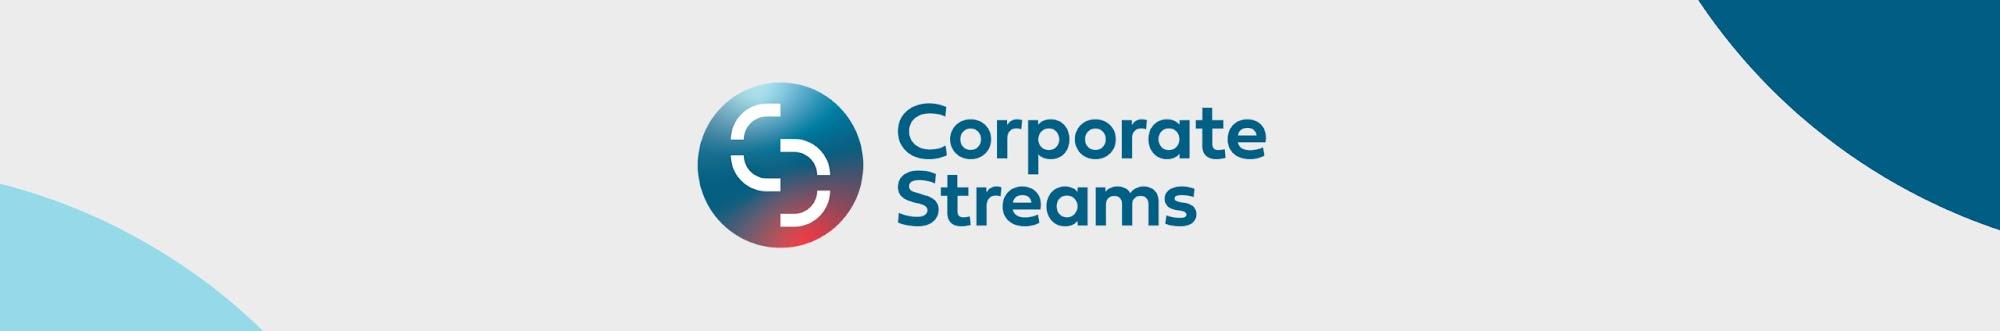 Corporate Streams